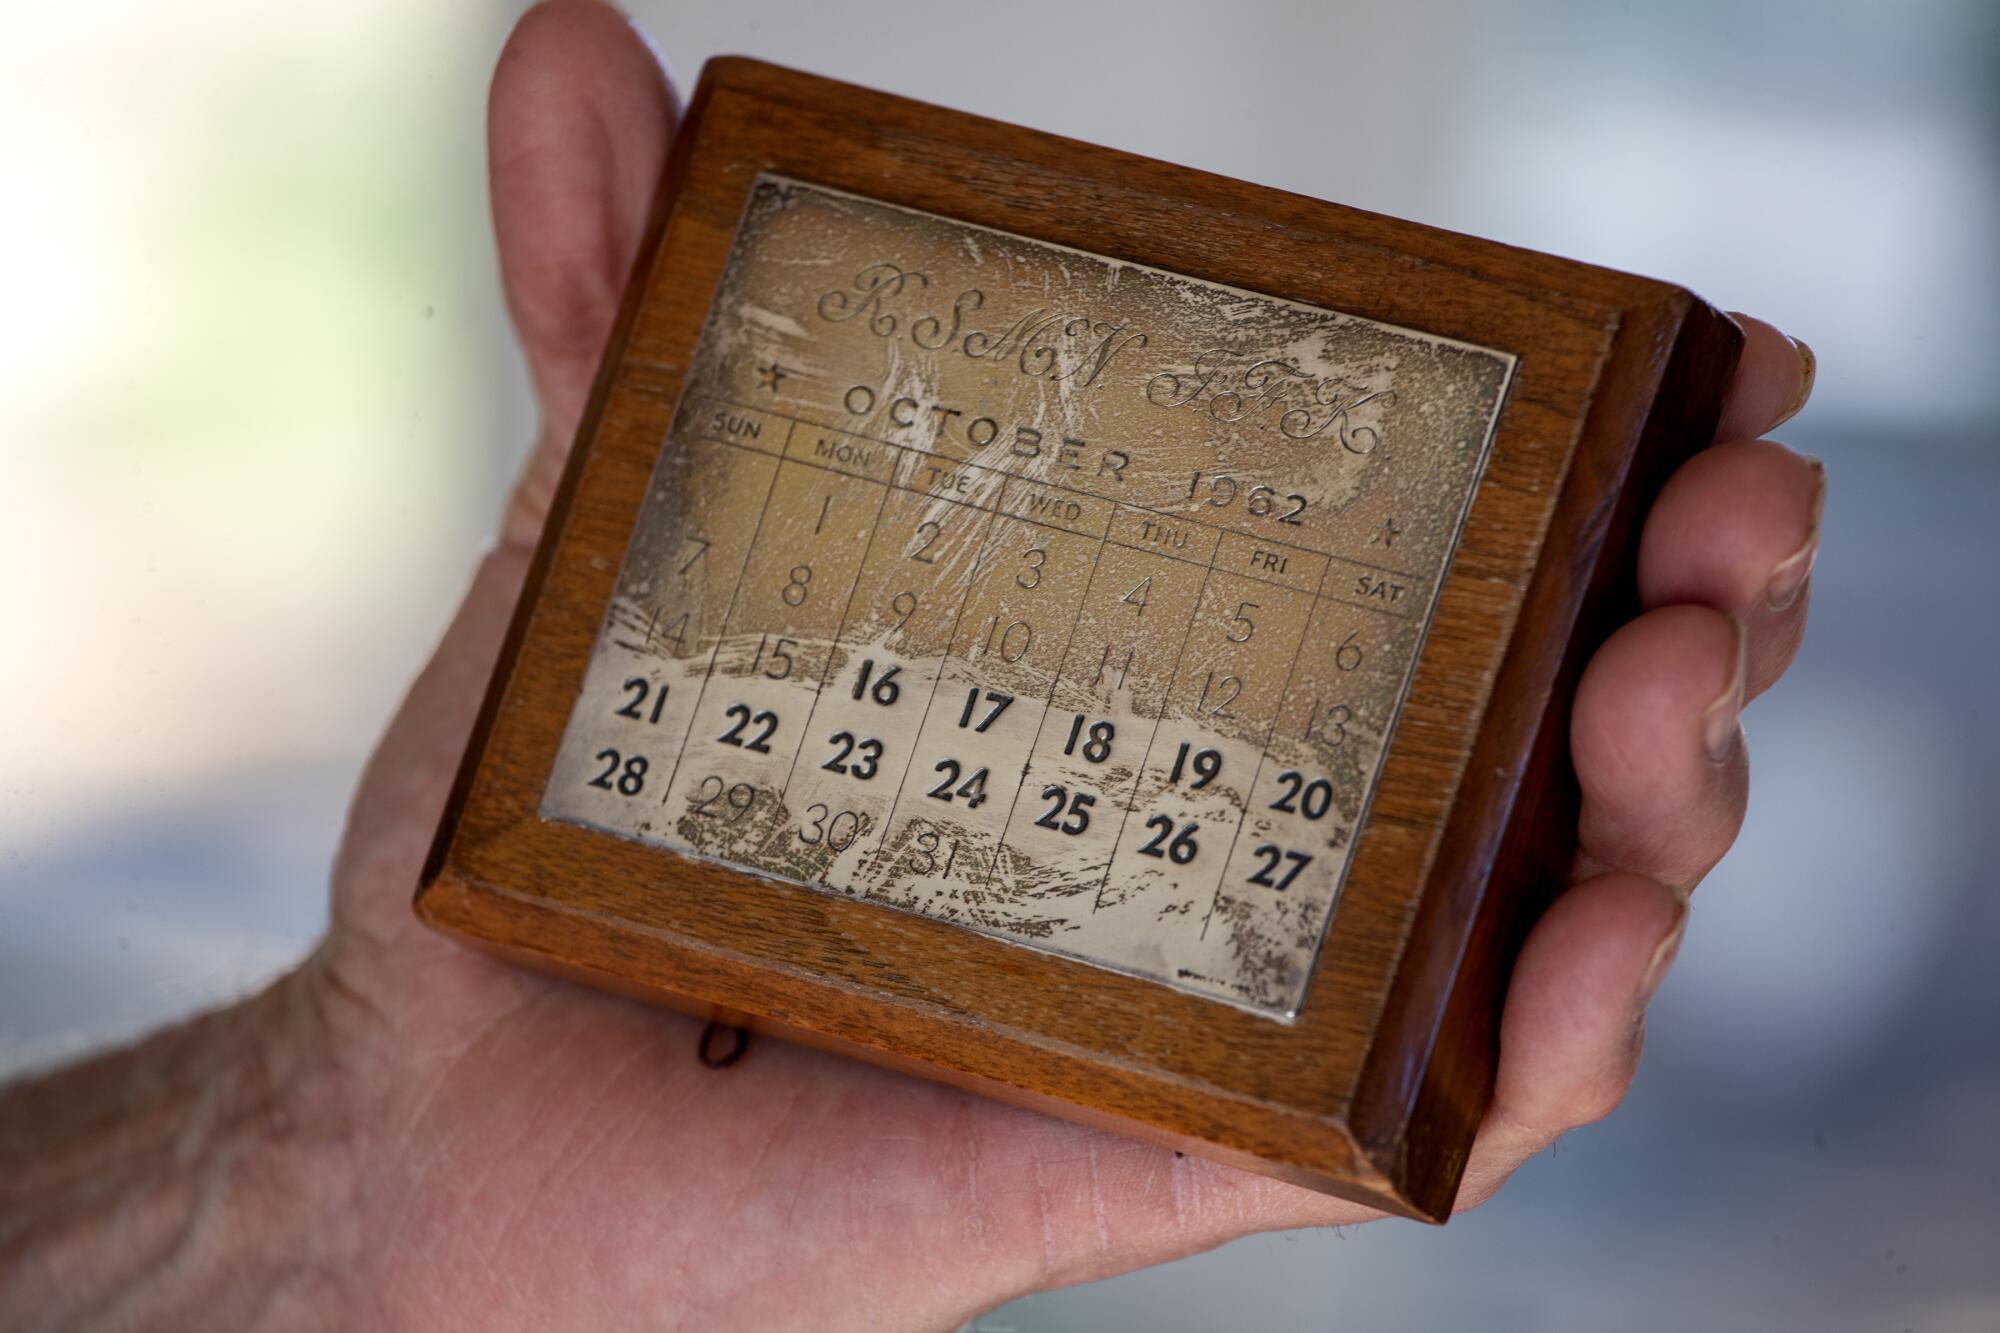 Walnut farmer and activist Craig McNamara holds a commemorative calendar from the days of the Cuban missile crisis.